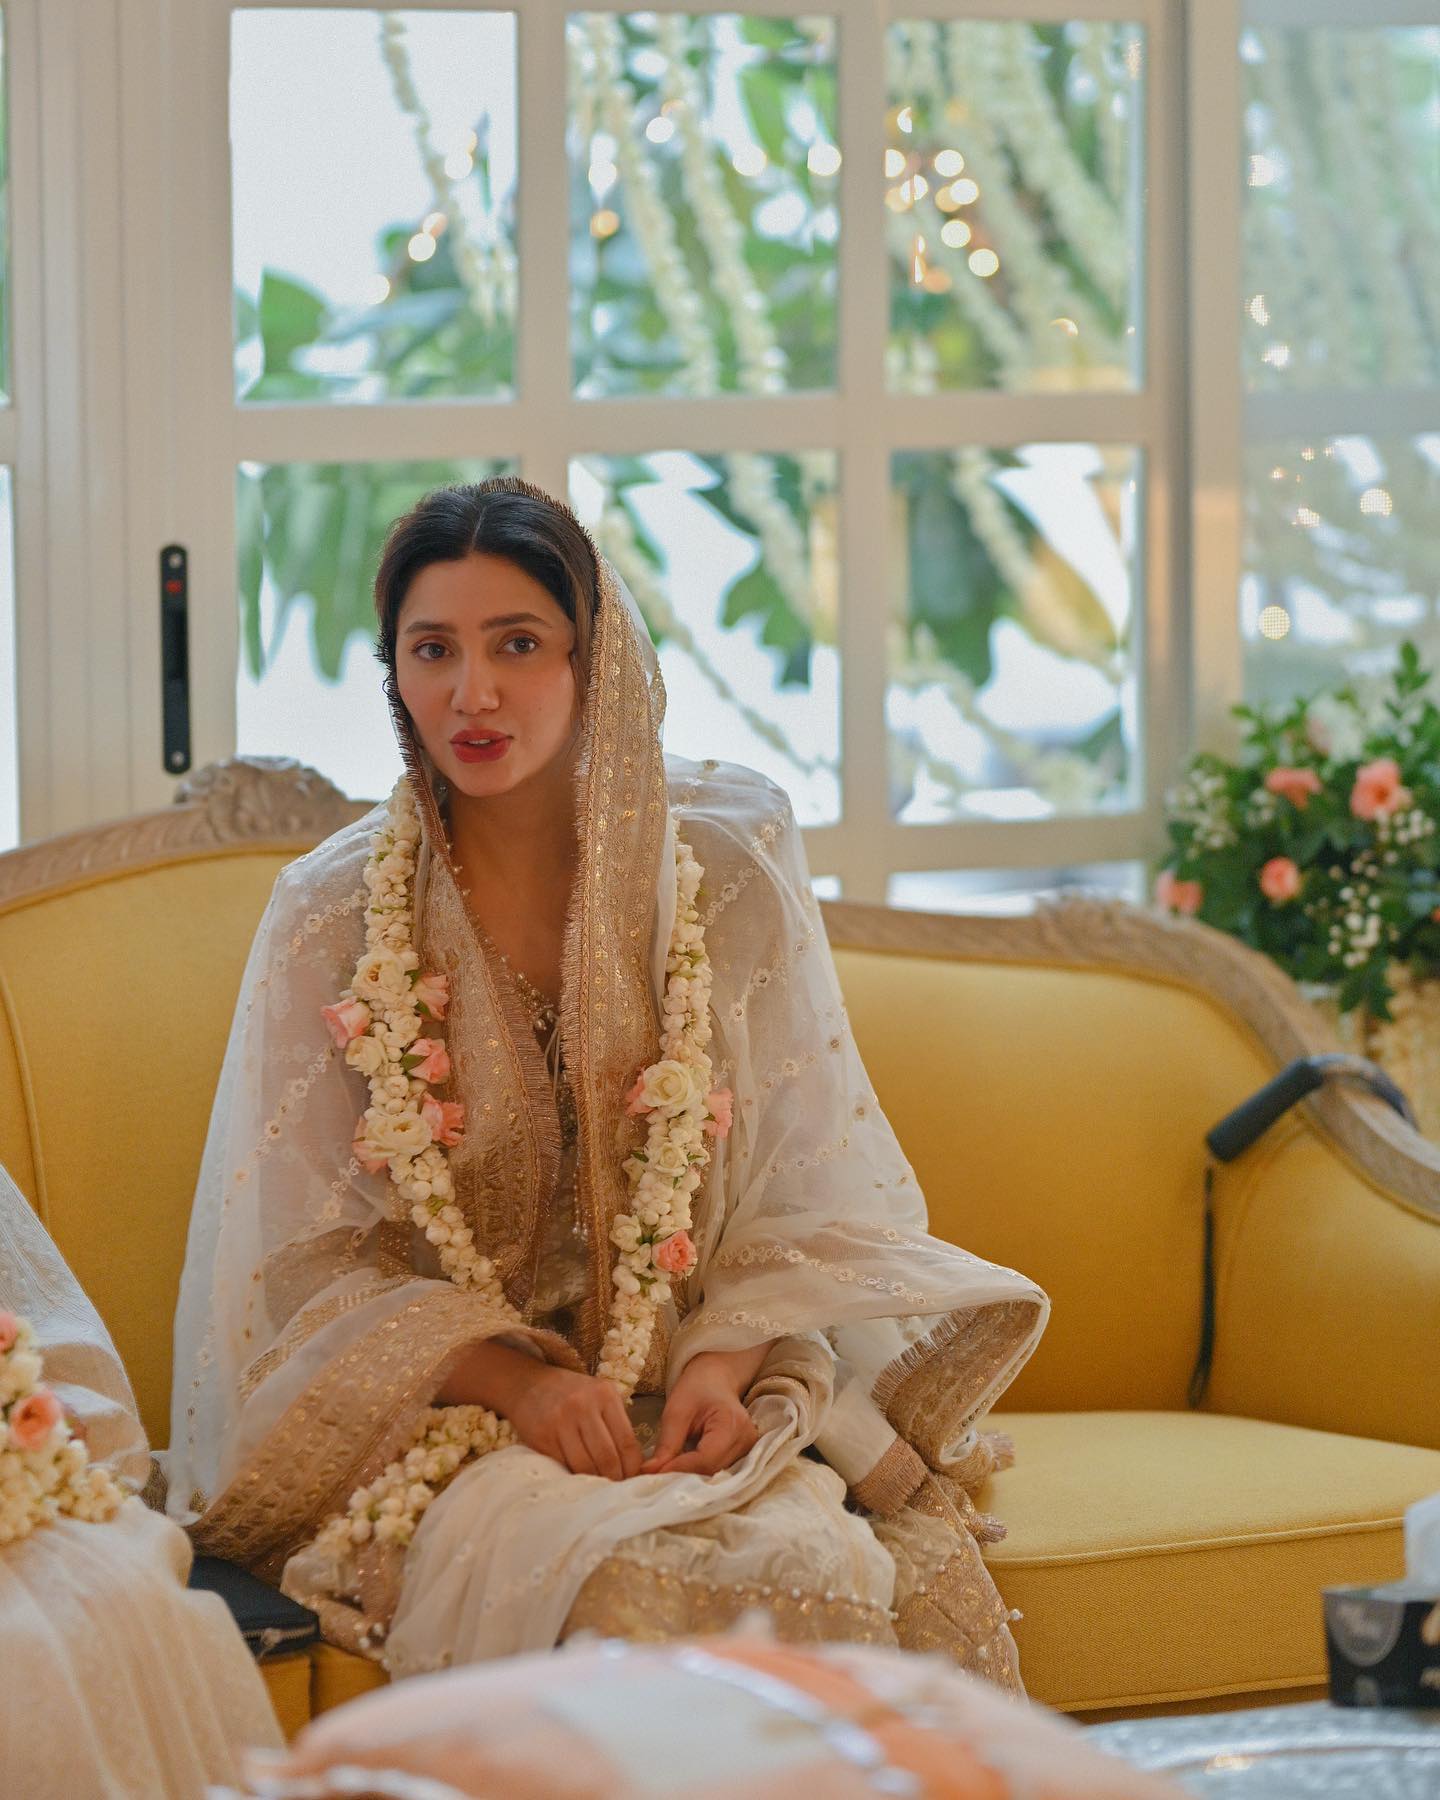 Mahira Khan Shares A Peek Of Her Pre-Wedding Bridal Looks